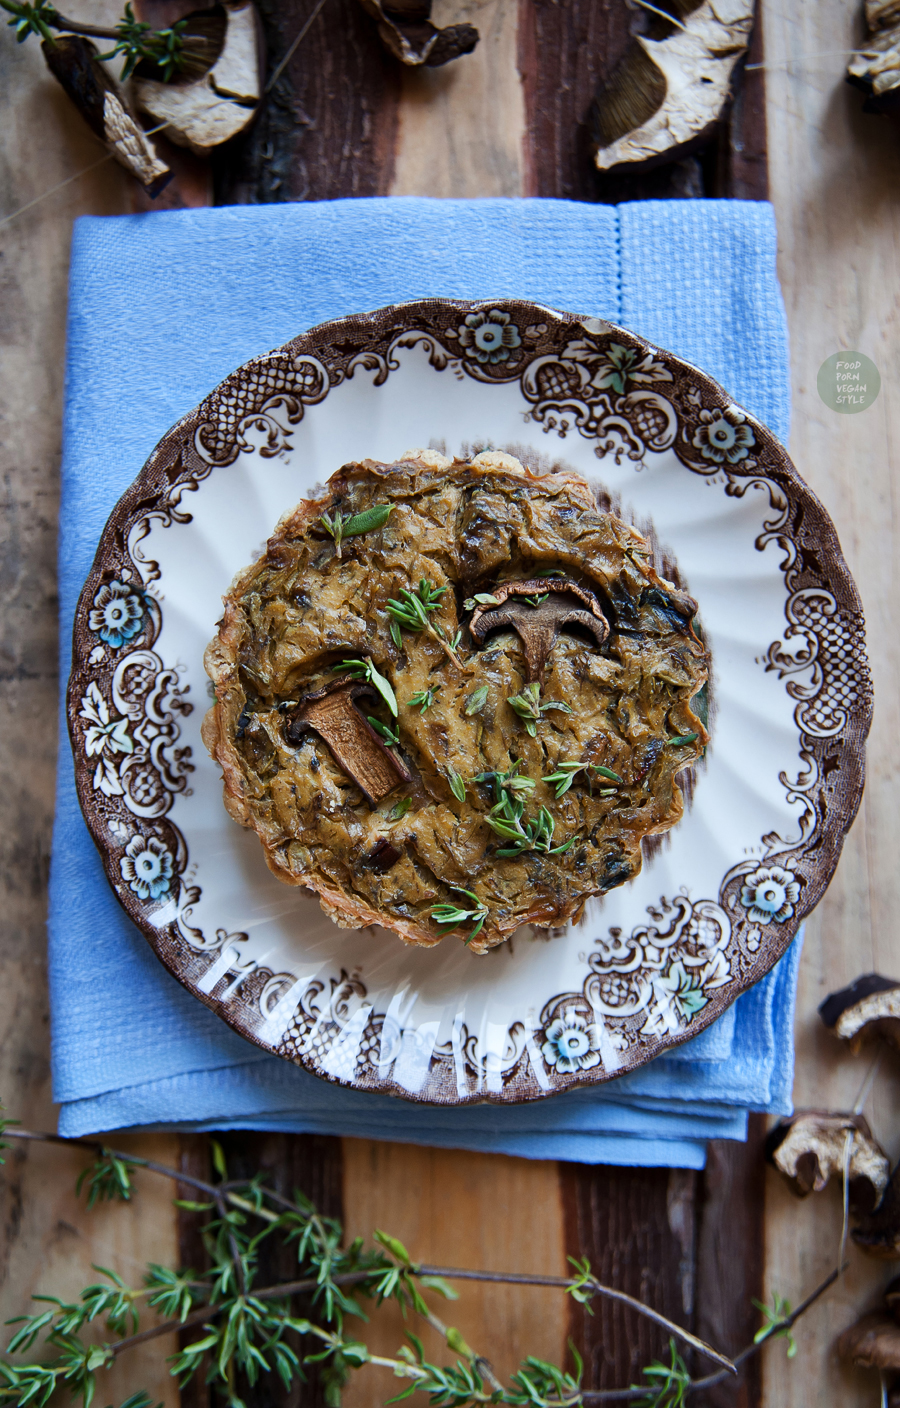 Vegan tartlets with wild mushrooms, herbs and tofu (gluten-free)